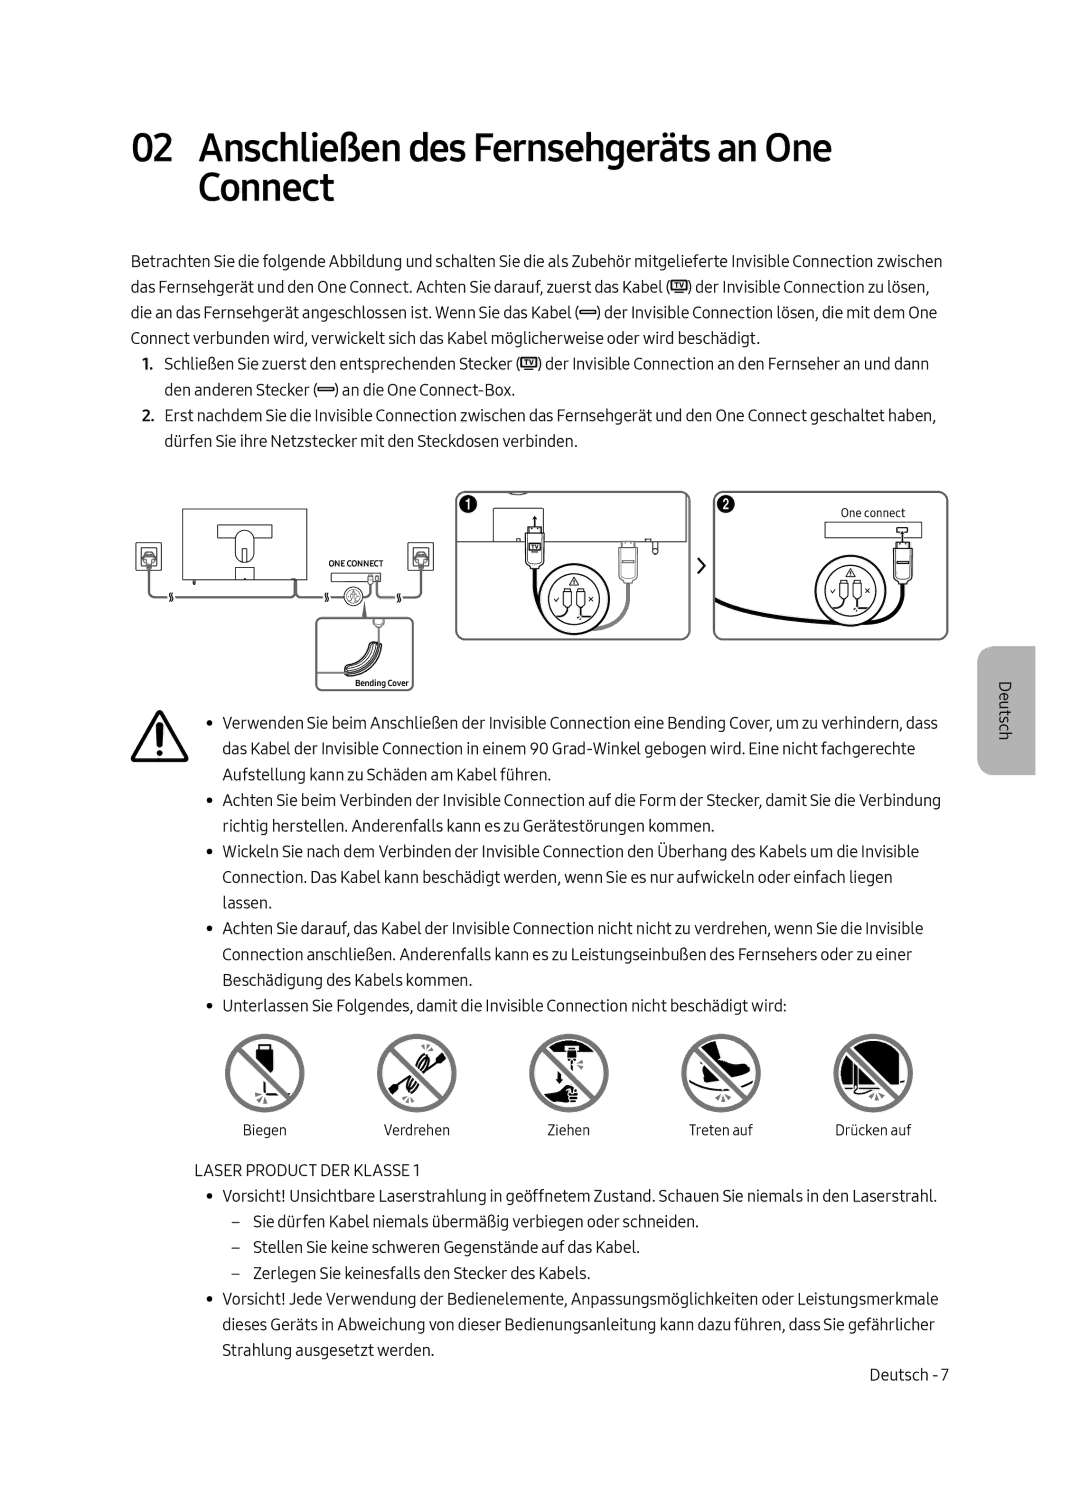 Samsung UE43LS003AUXXU, UE43LS003AUXZG manual Anschließen des Fernsehgeräts an One Connect, Laser Product DER Klasse 